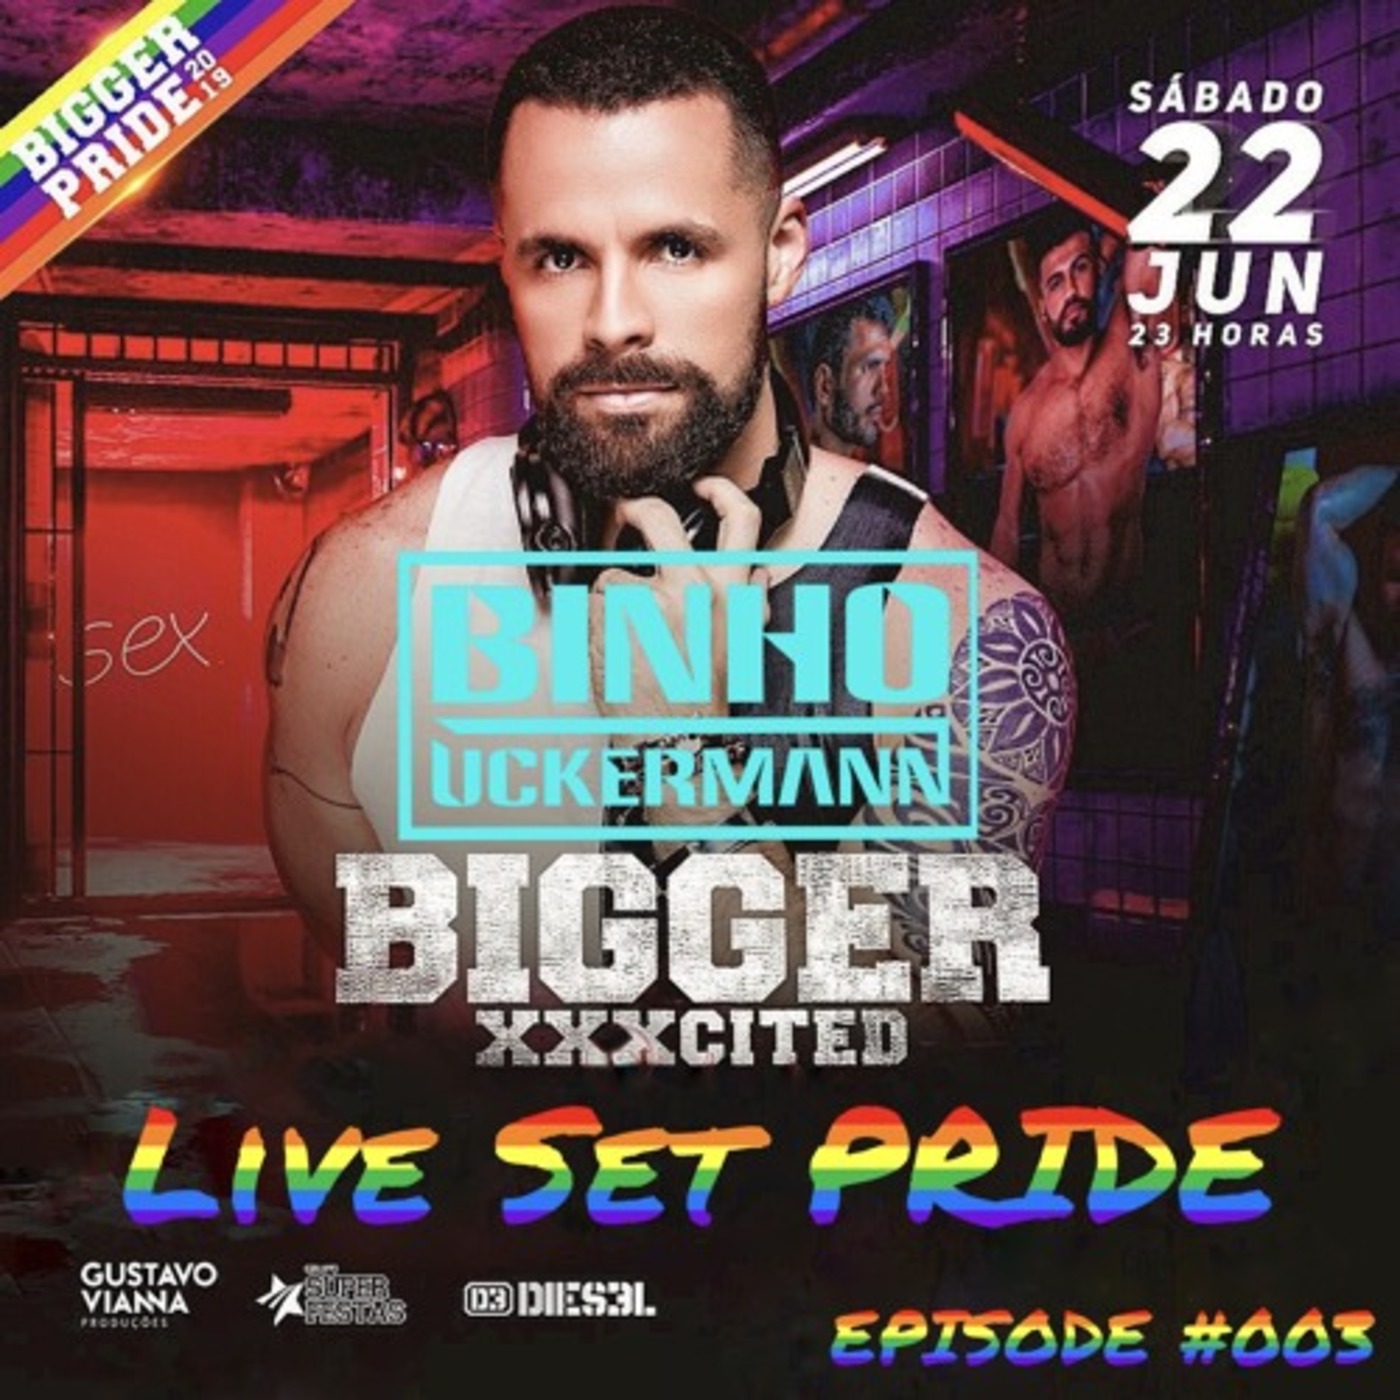 LIVE SET BIGGER XXXCITED Pride 2019 Episode #003 - São Paulo Brazil